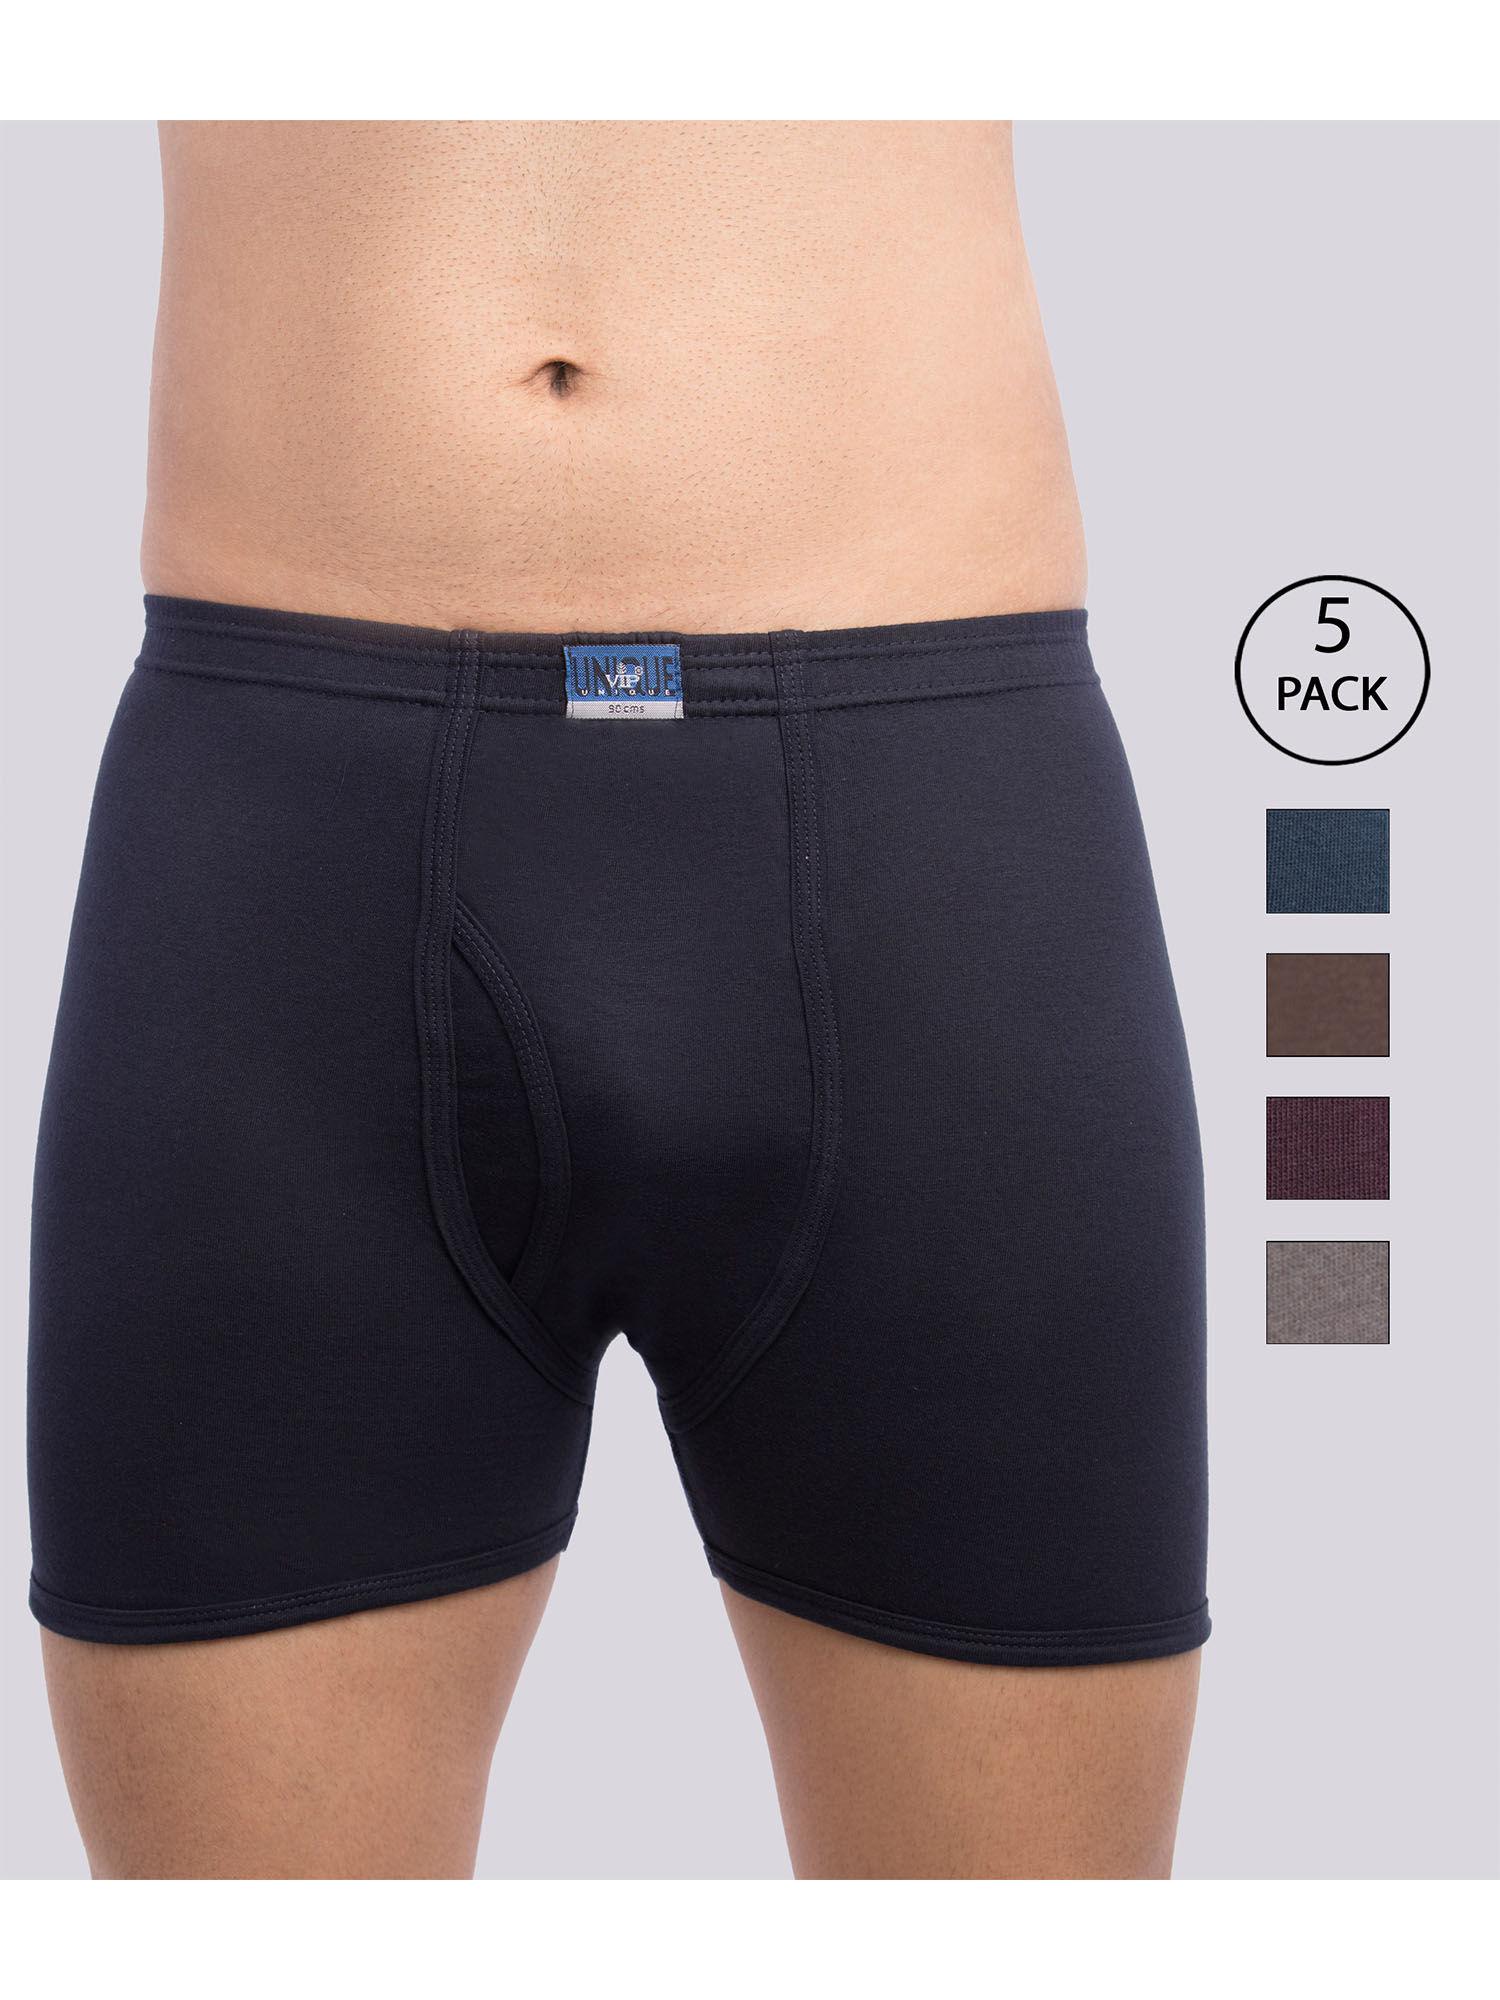 unique men's snug fit cotton trunks in assorted colors (pack of 5)